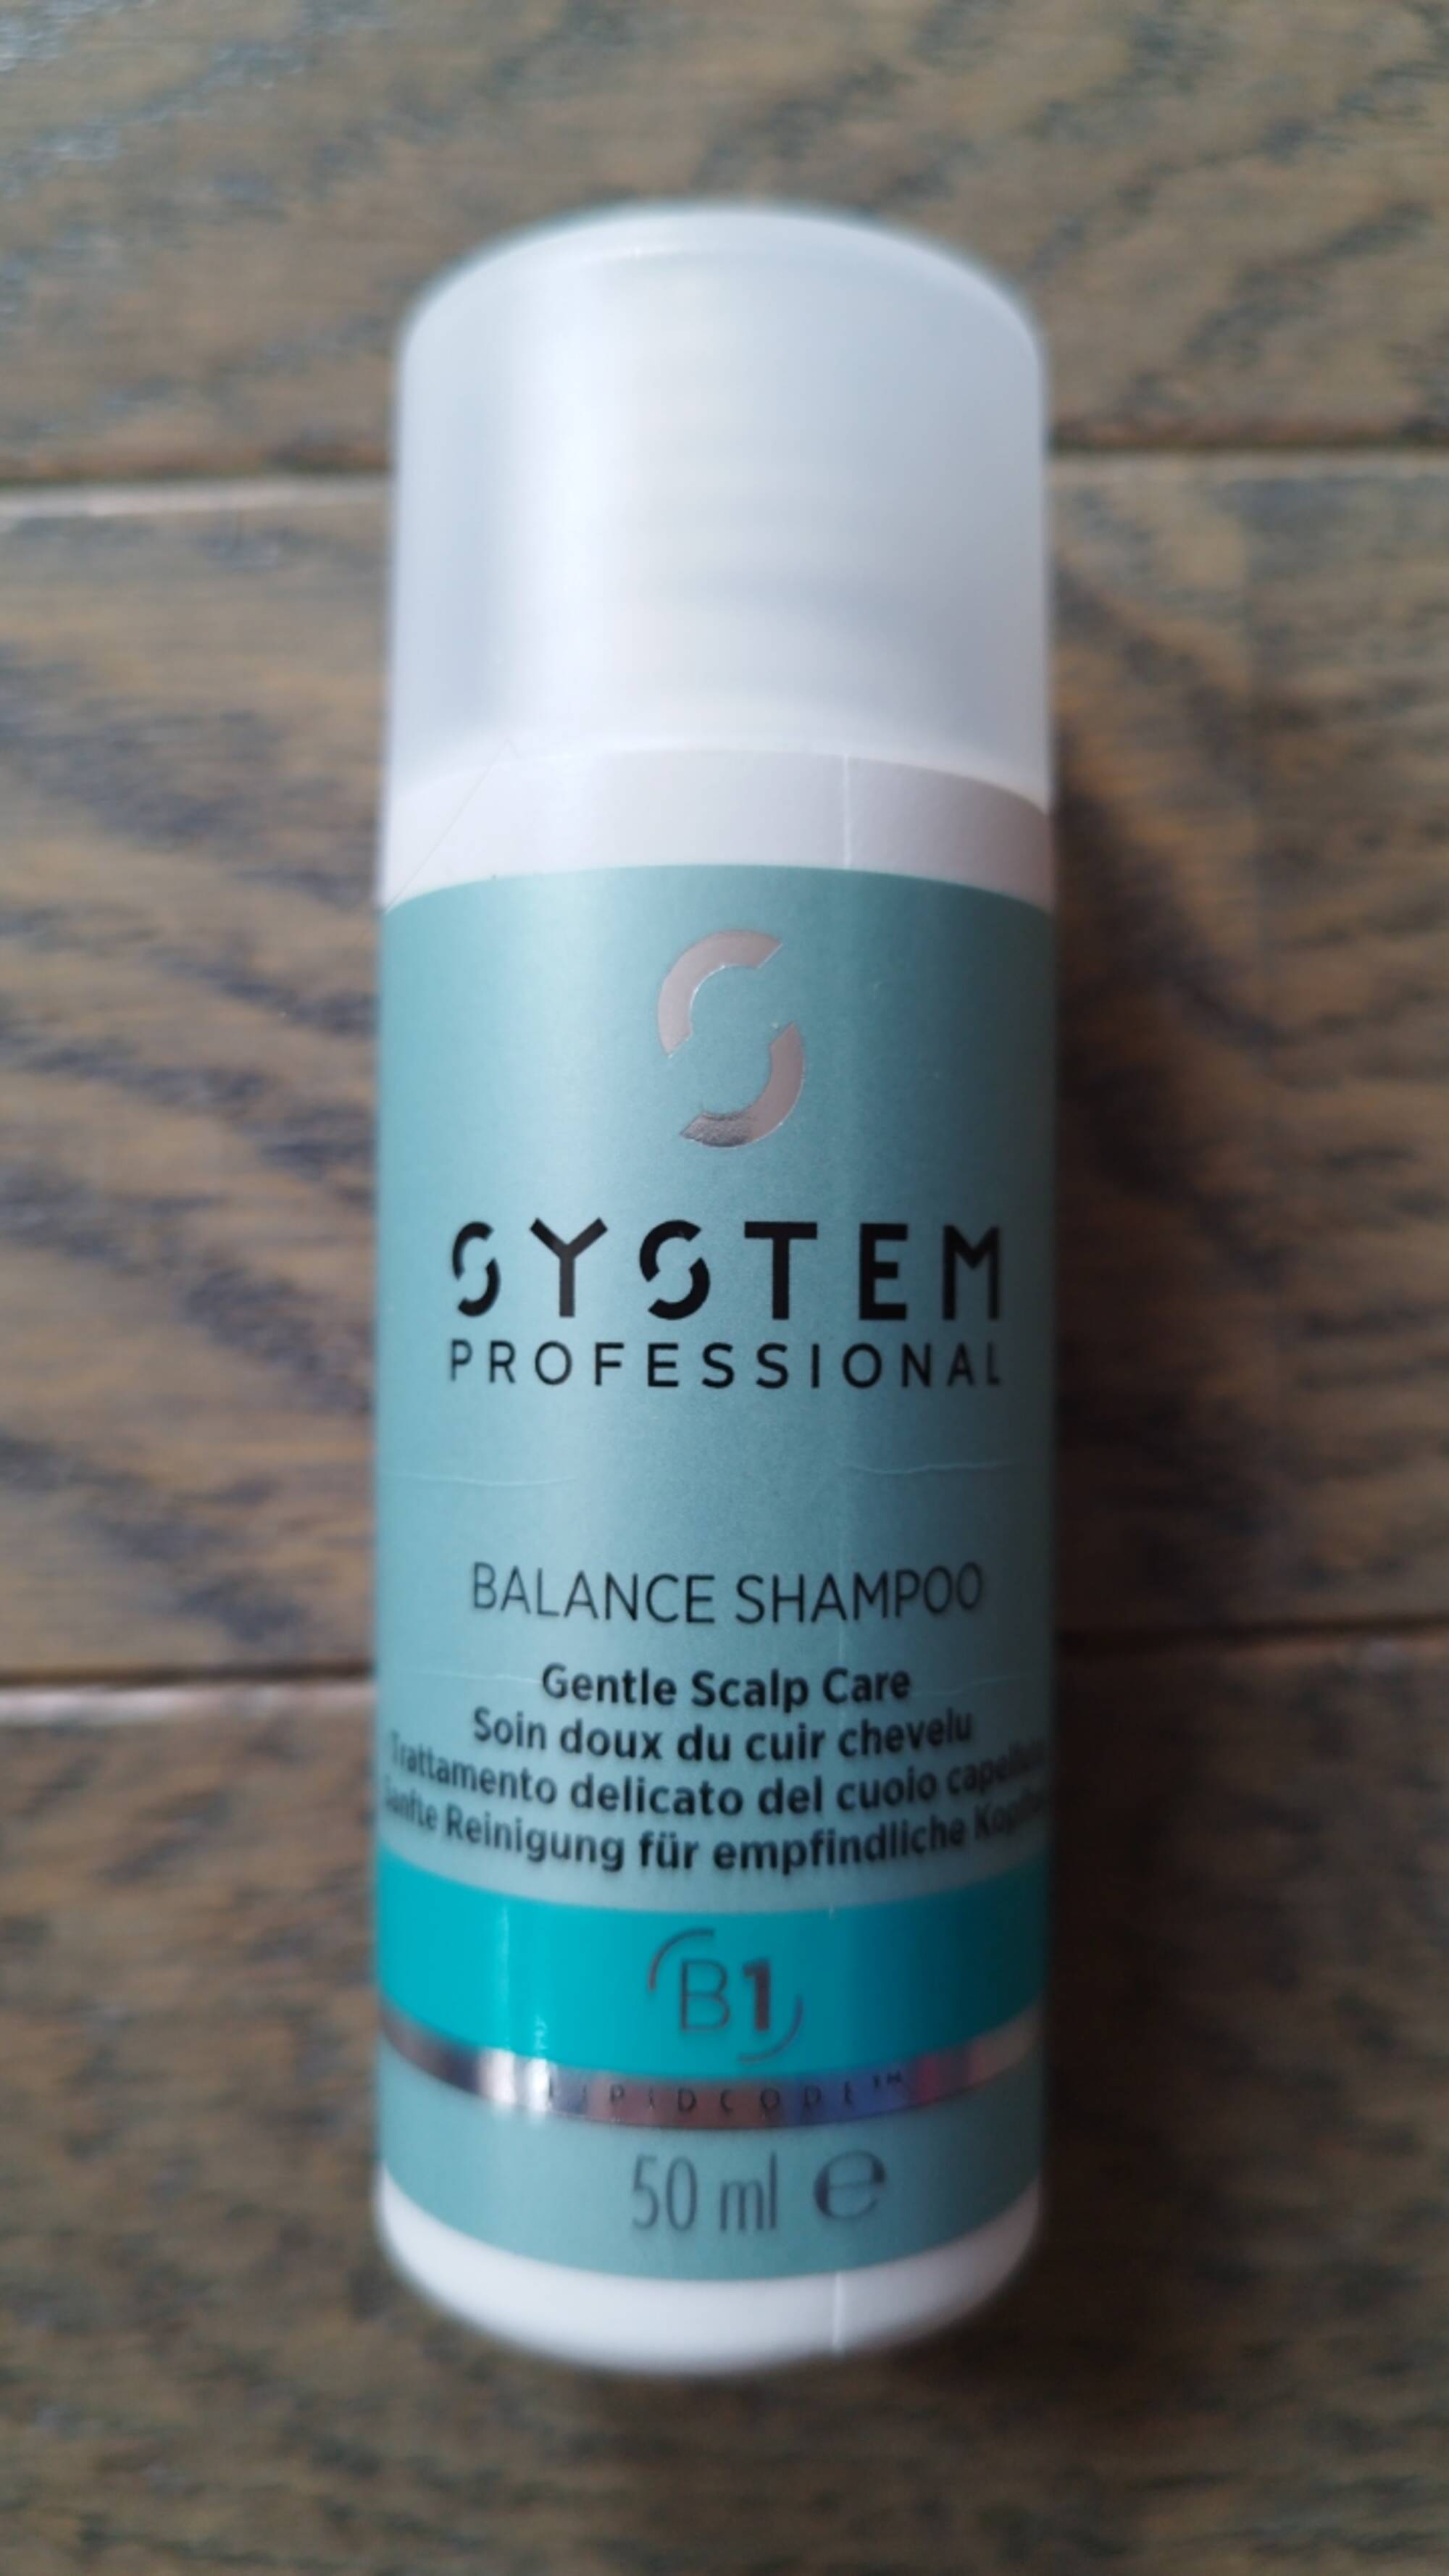 SYSTEM PROFESSIONAL - Balance shampoo B1 - Soin doux du cuir chevelu